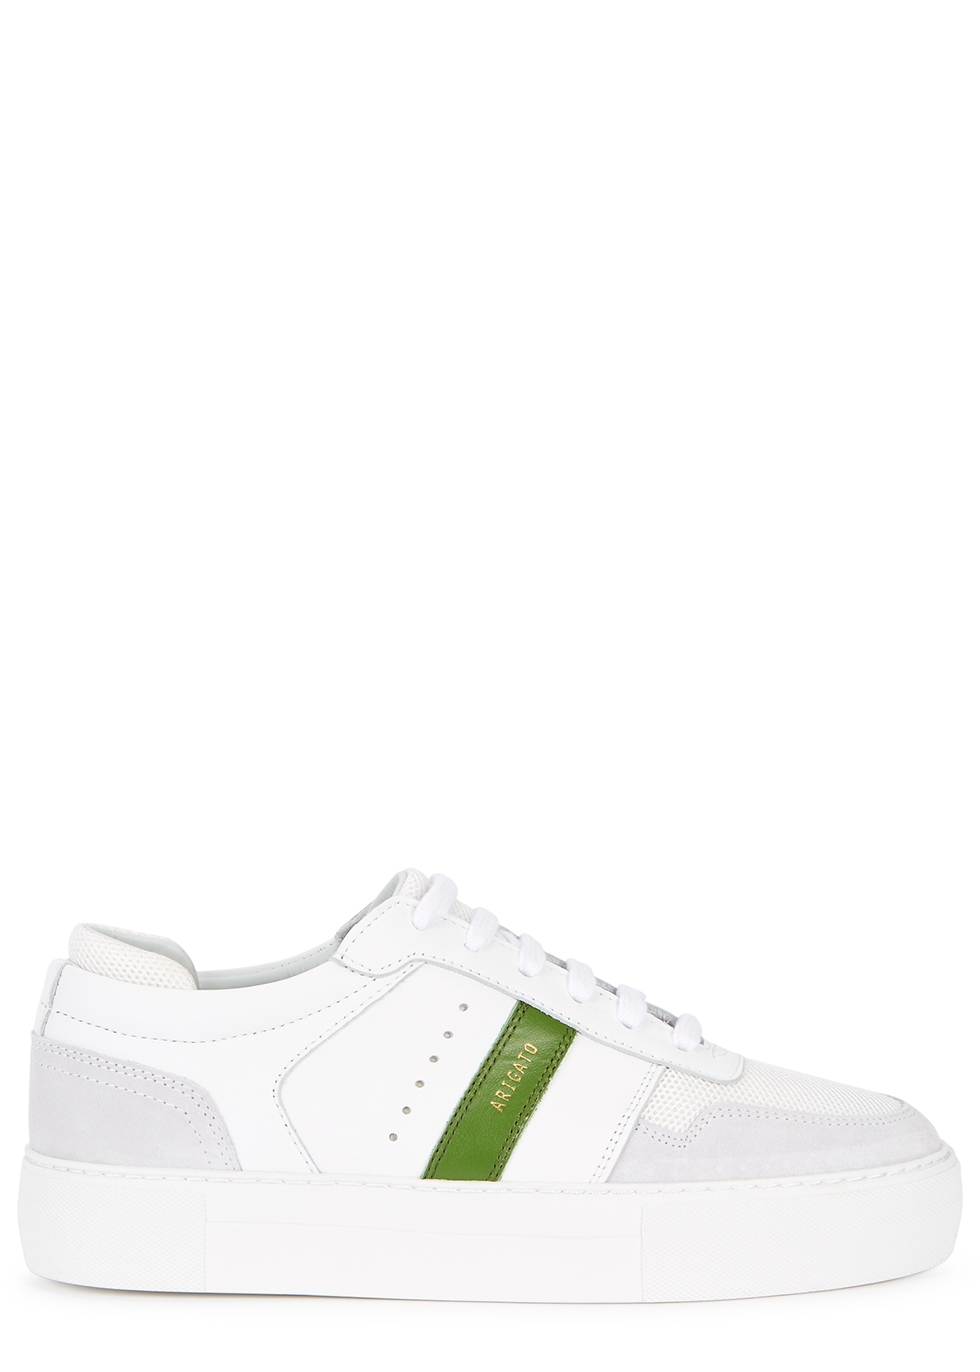 Axel Arigato Platform white leather sneakers - Harvey Nichols